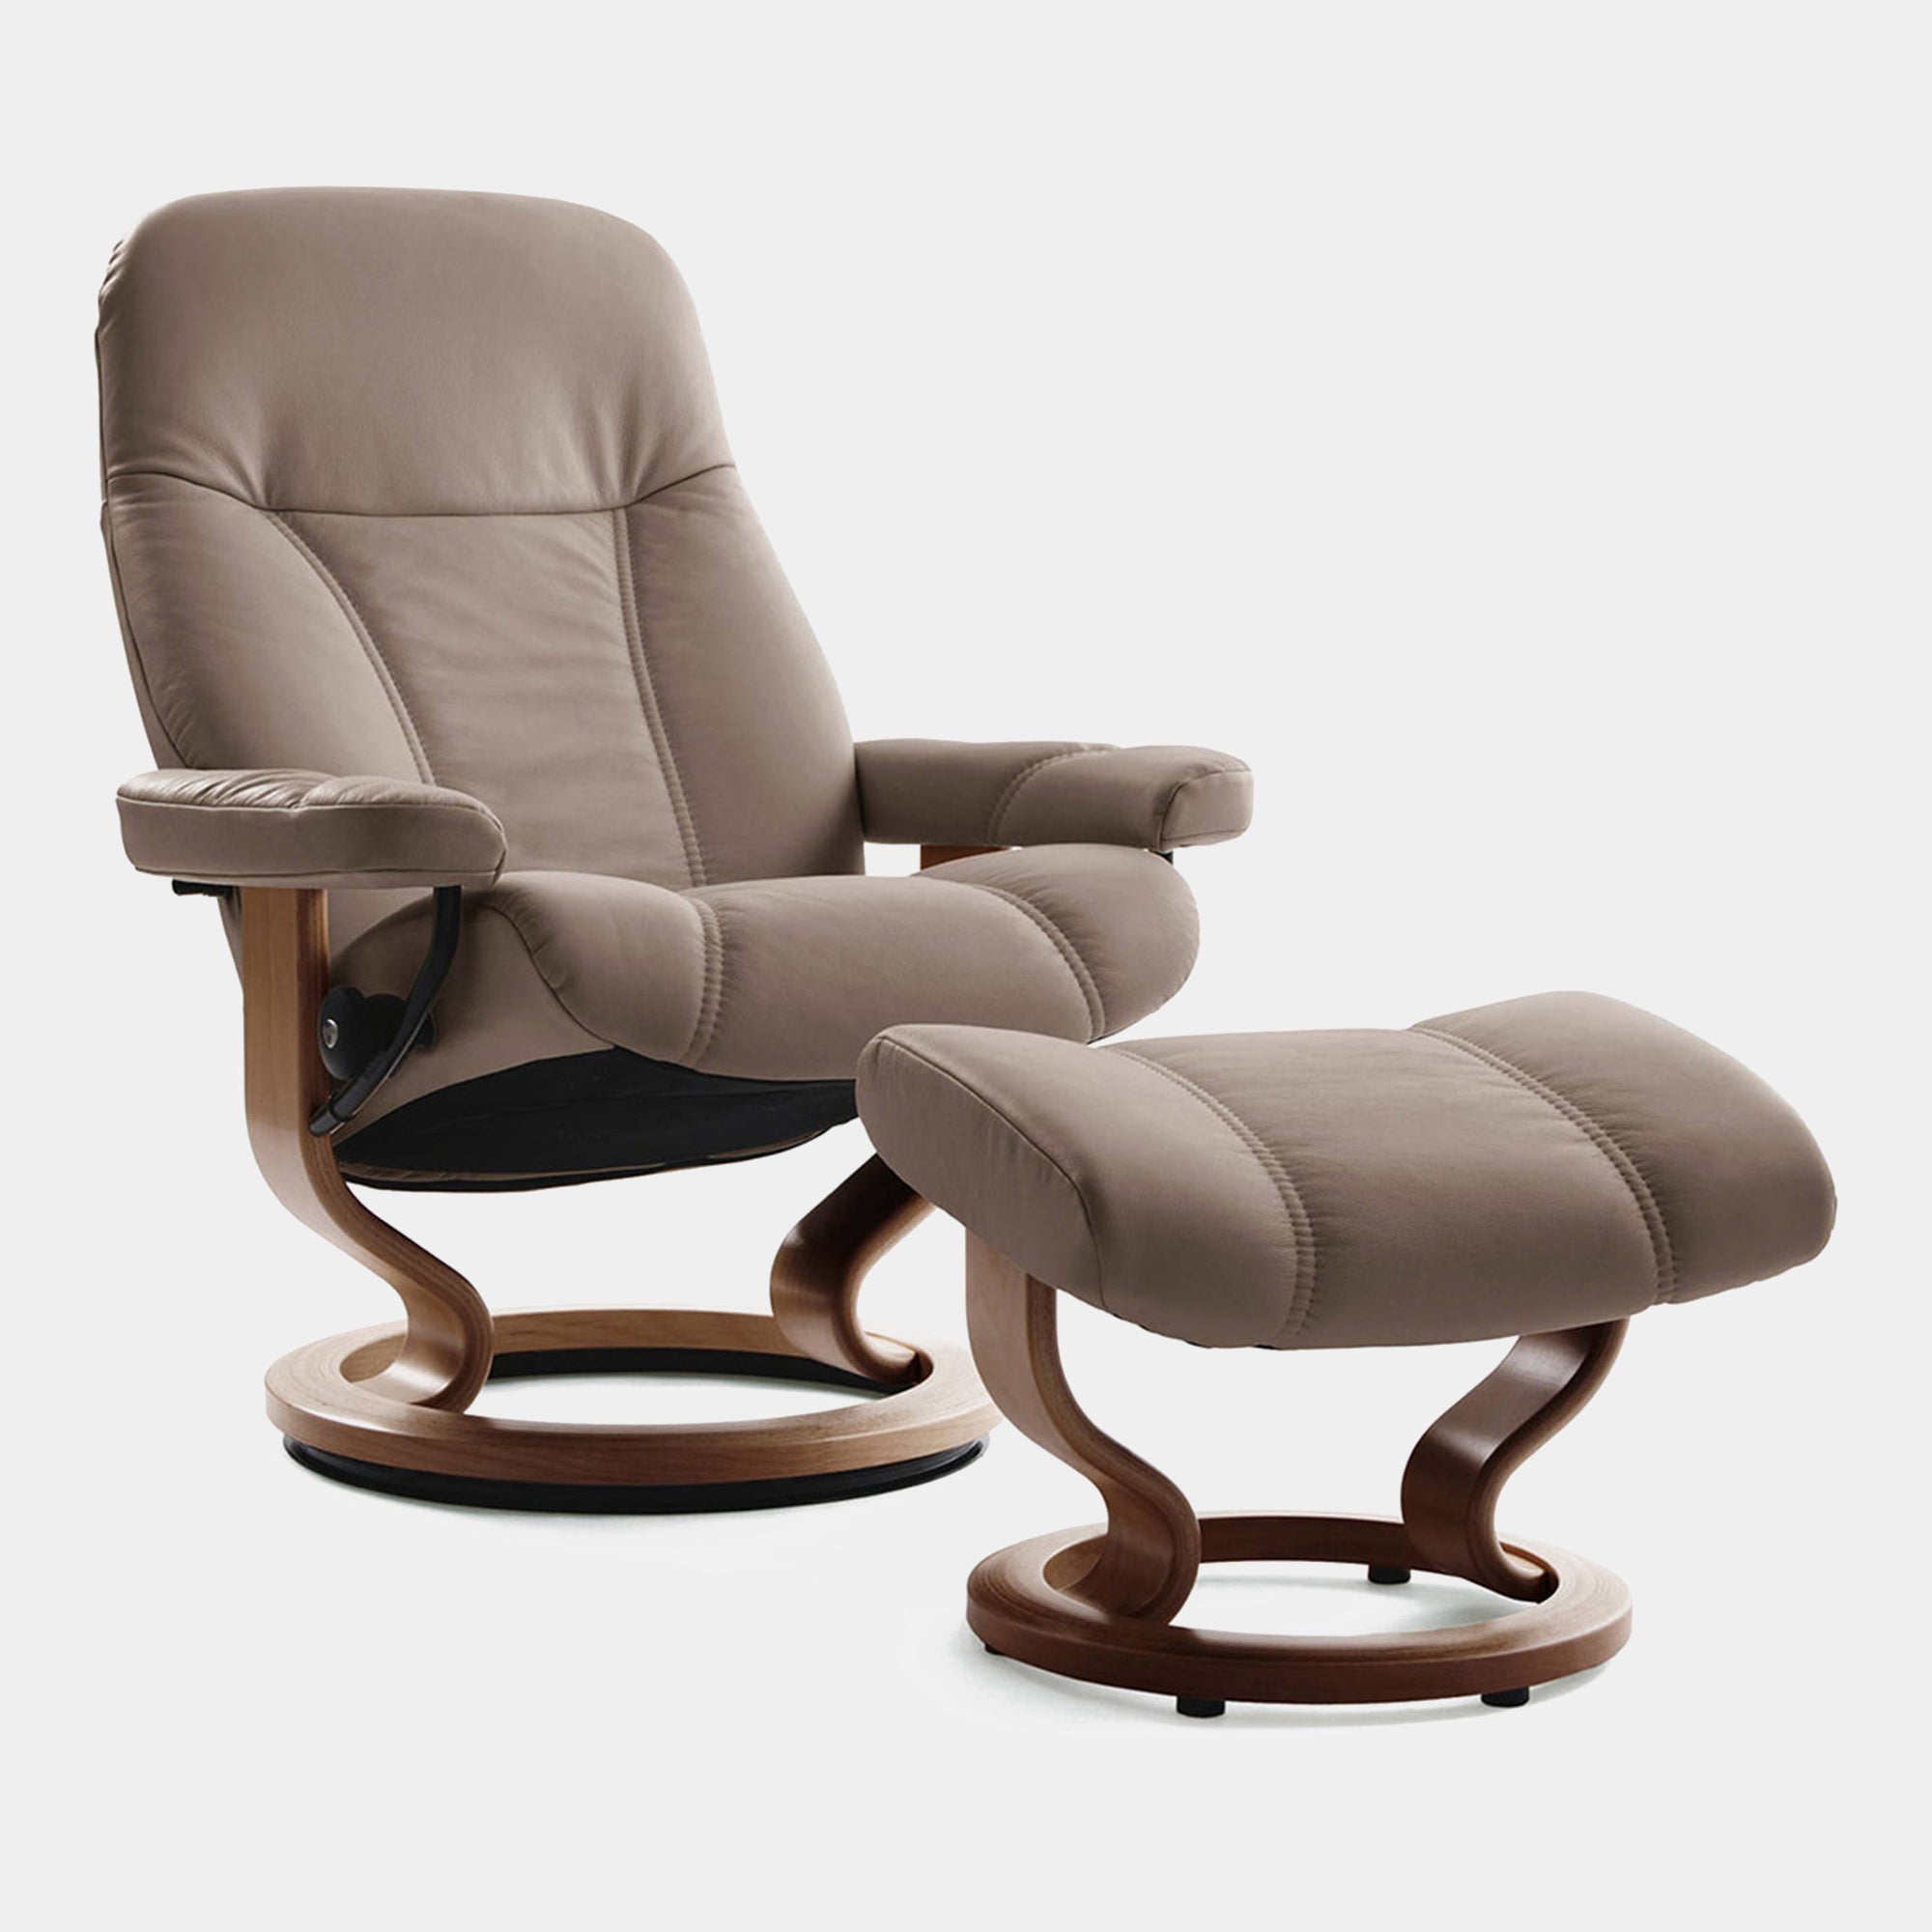 Chair & Stool Medium Batick Mole Leather - Walnut Wood Finish